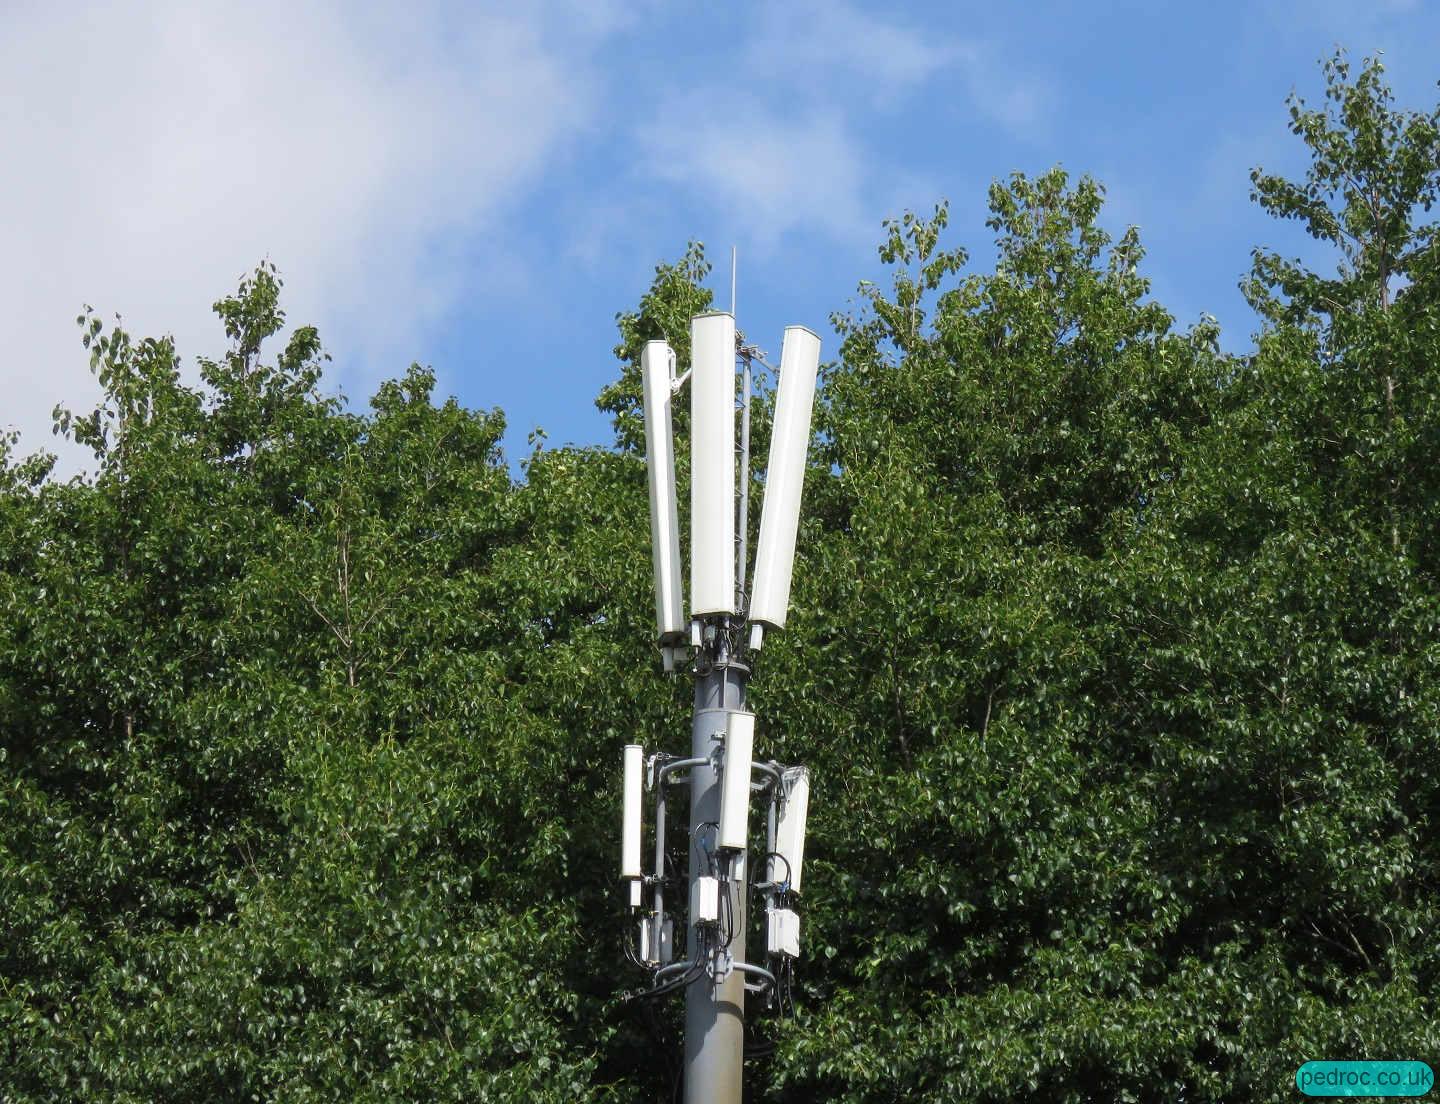 Manx Telecom Mast at Braddan Ground Station